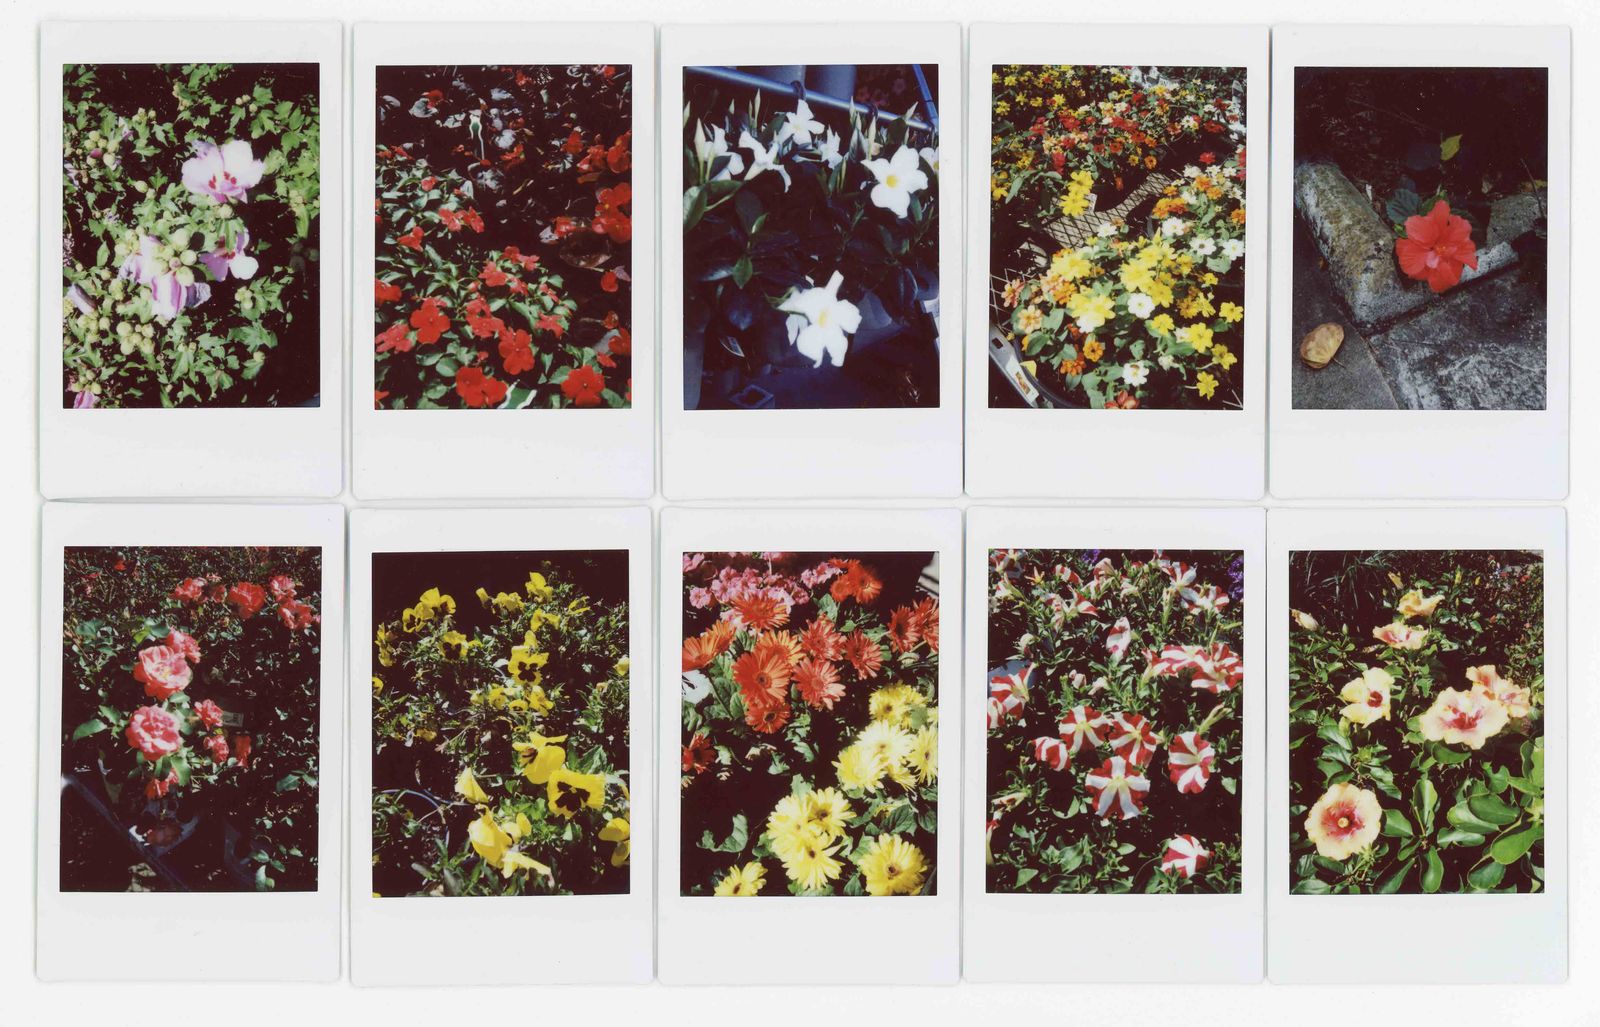 © RACHEL TREIDE - "A Minute Fraction of All the Flowers I've Ever Seen," photographs 121-130